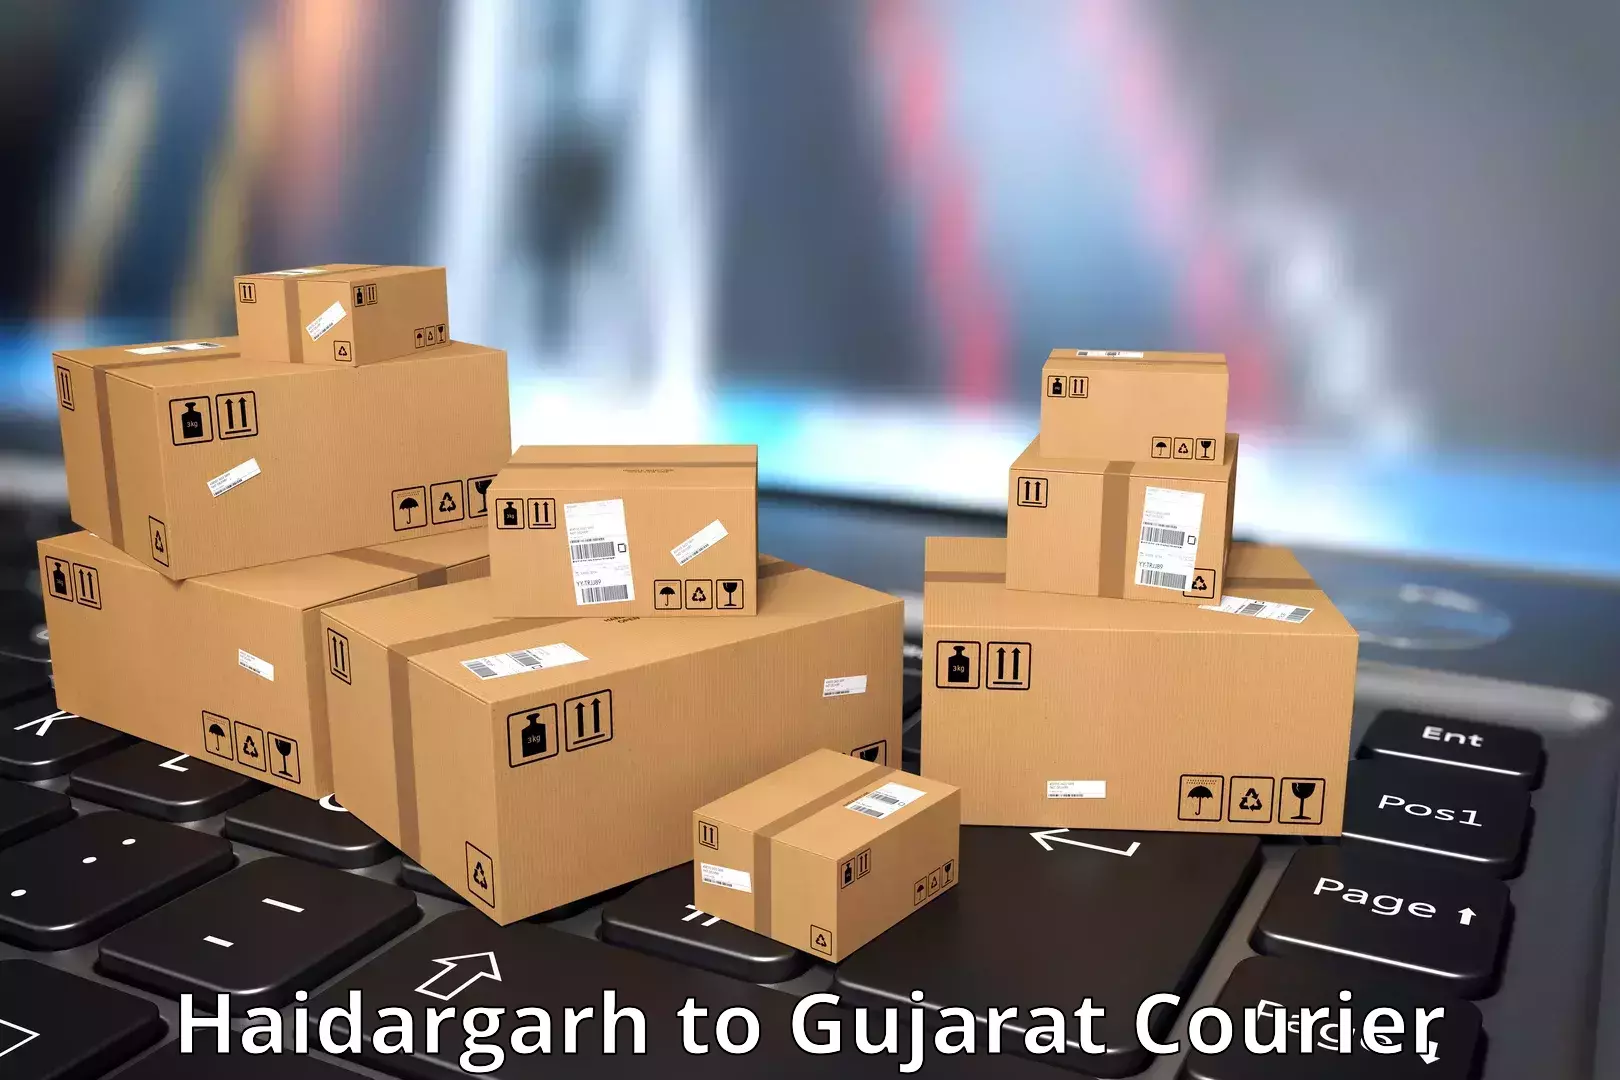 Reliable logistics providers Haidargarh to Kheda